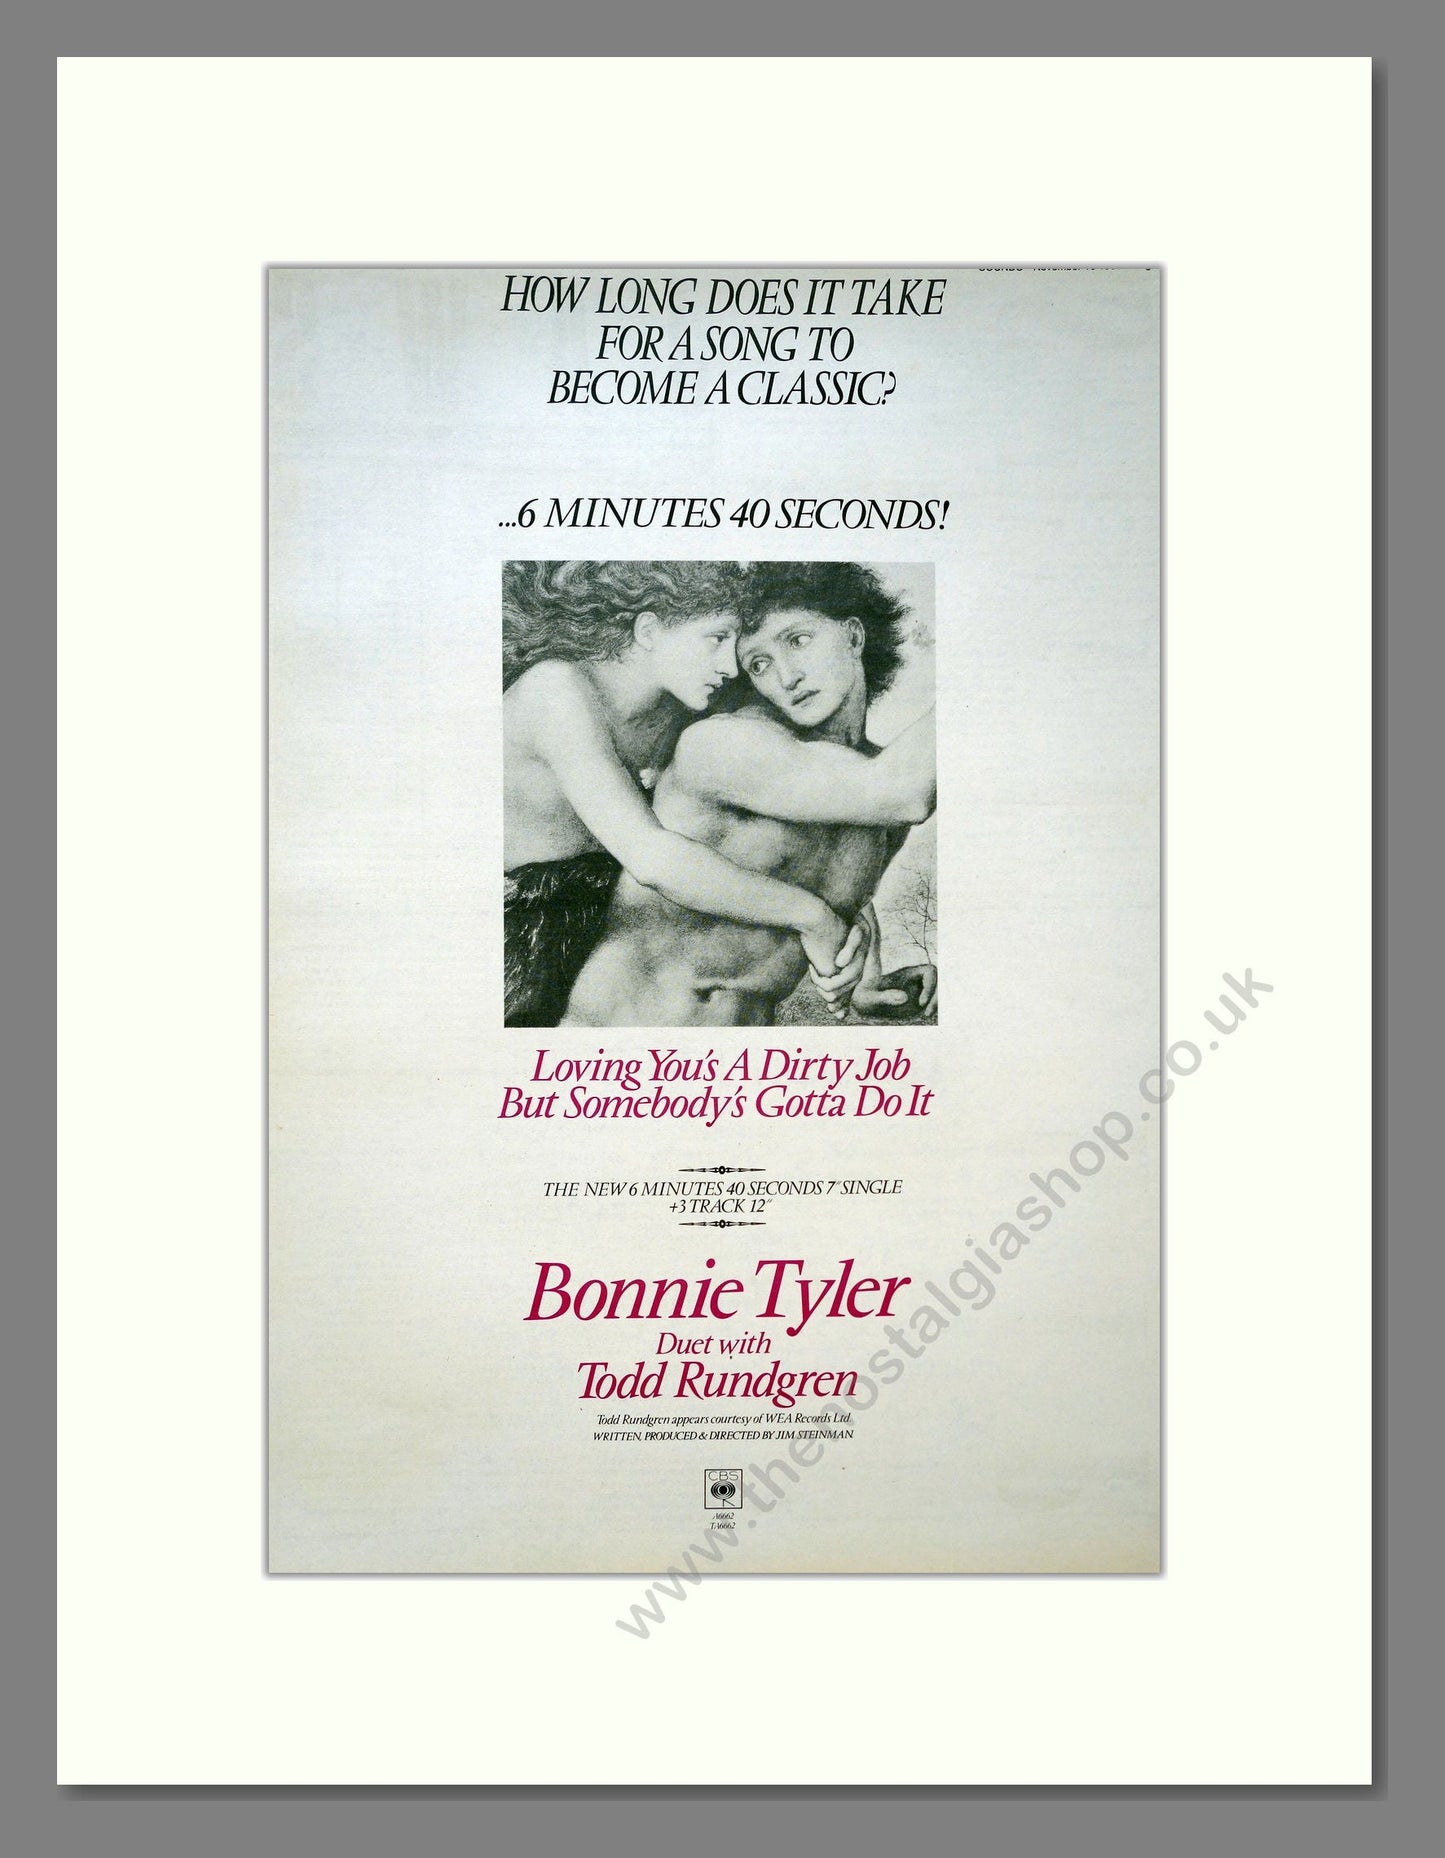 Bonnie Tyler - Loving You's A Dirty Job. Vintage Advert 1985 (ref AD18335)